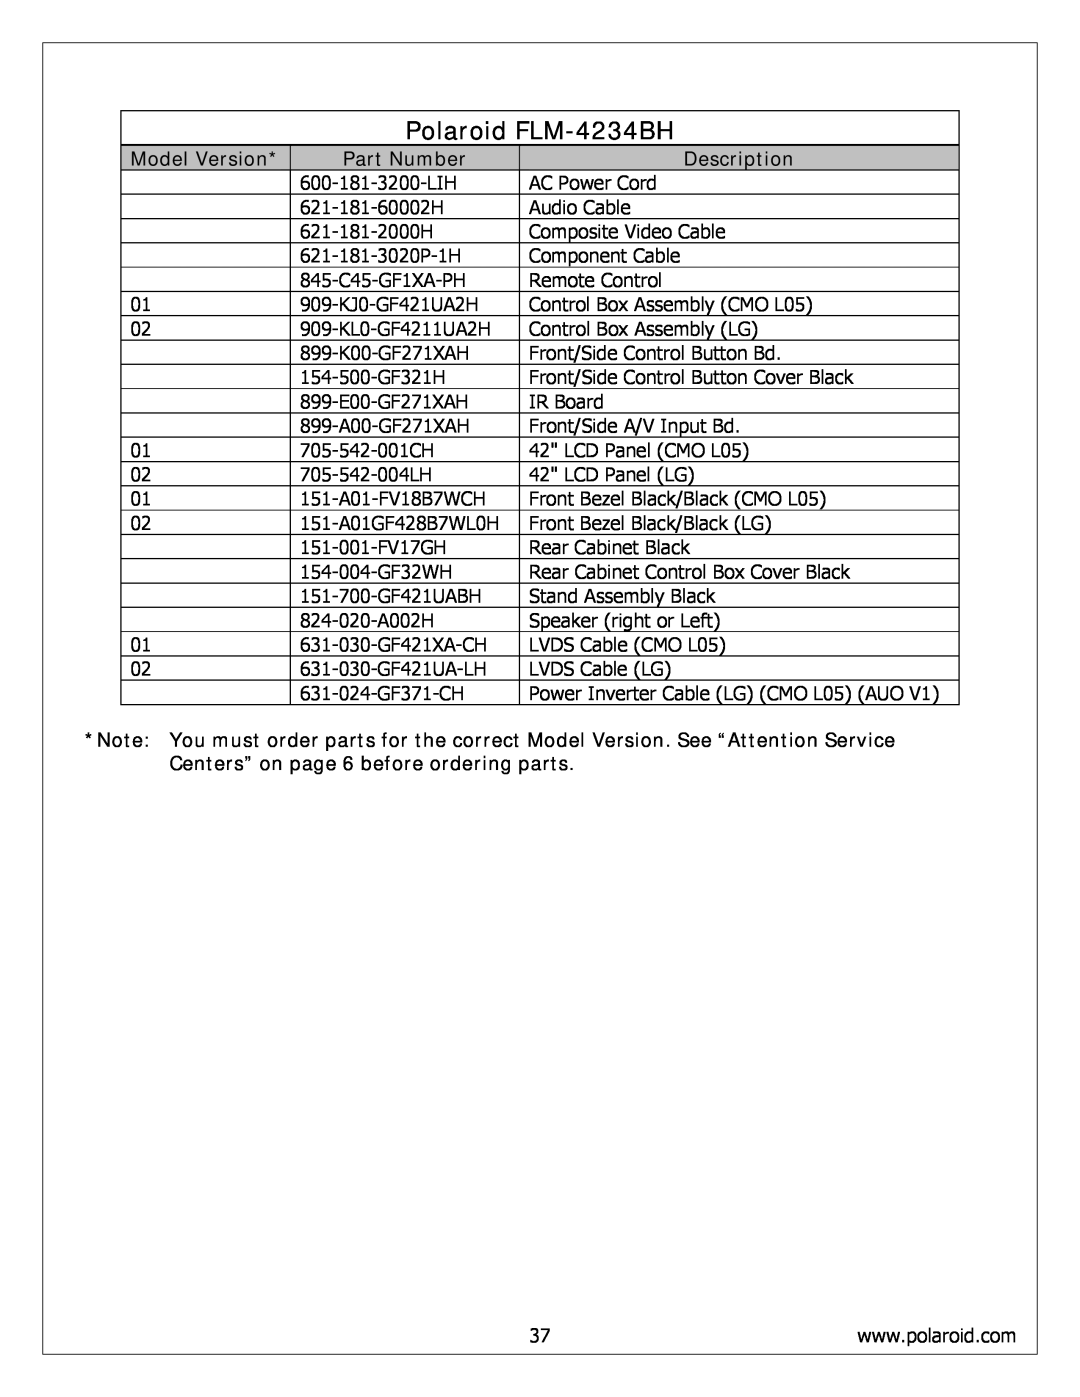 Polaroid FLM-4034B, FLM-4232HM service manual Polaroid FLM-4234BH, Model Version, Part Number, Description 